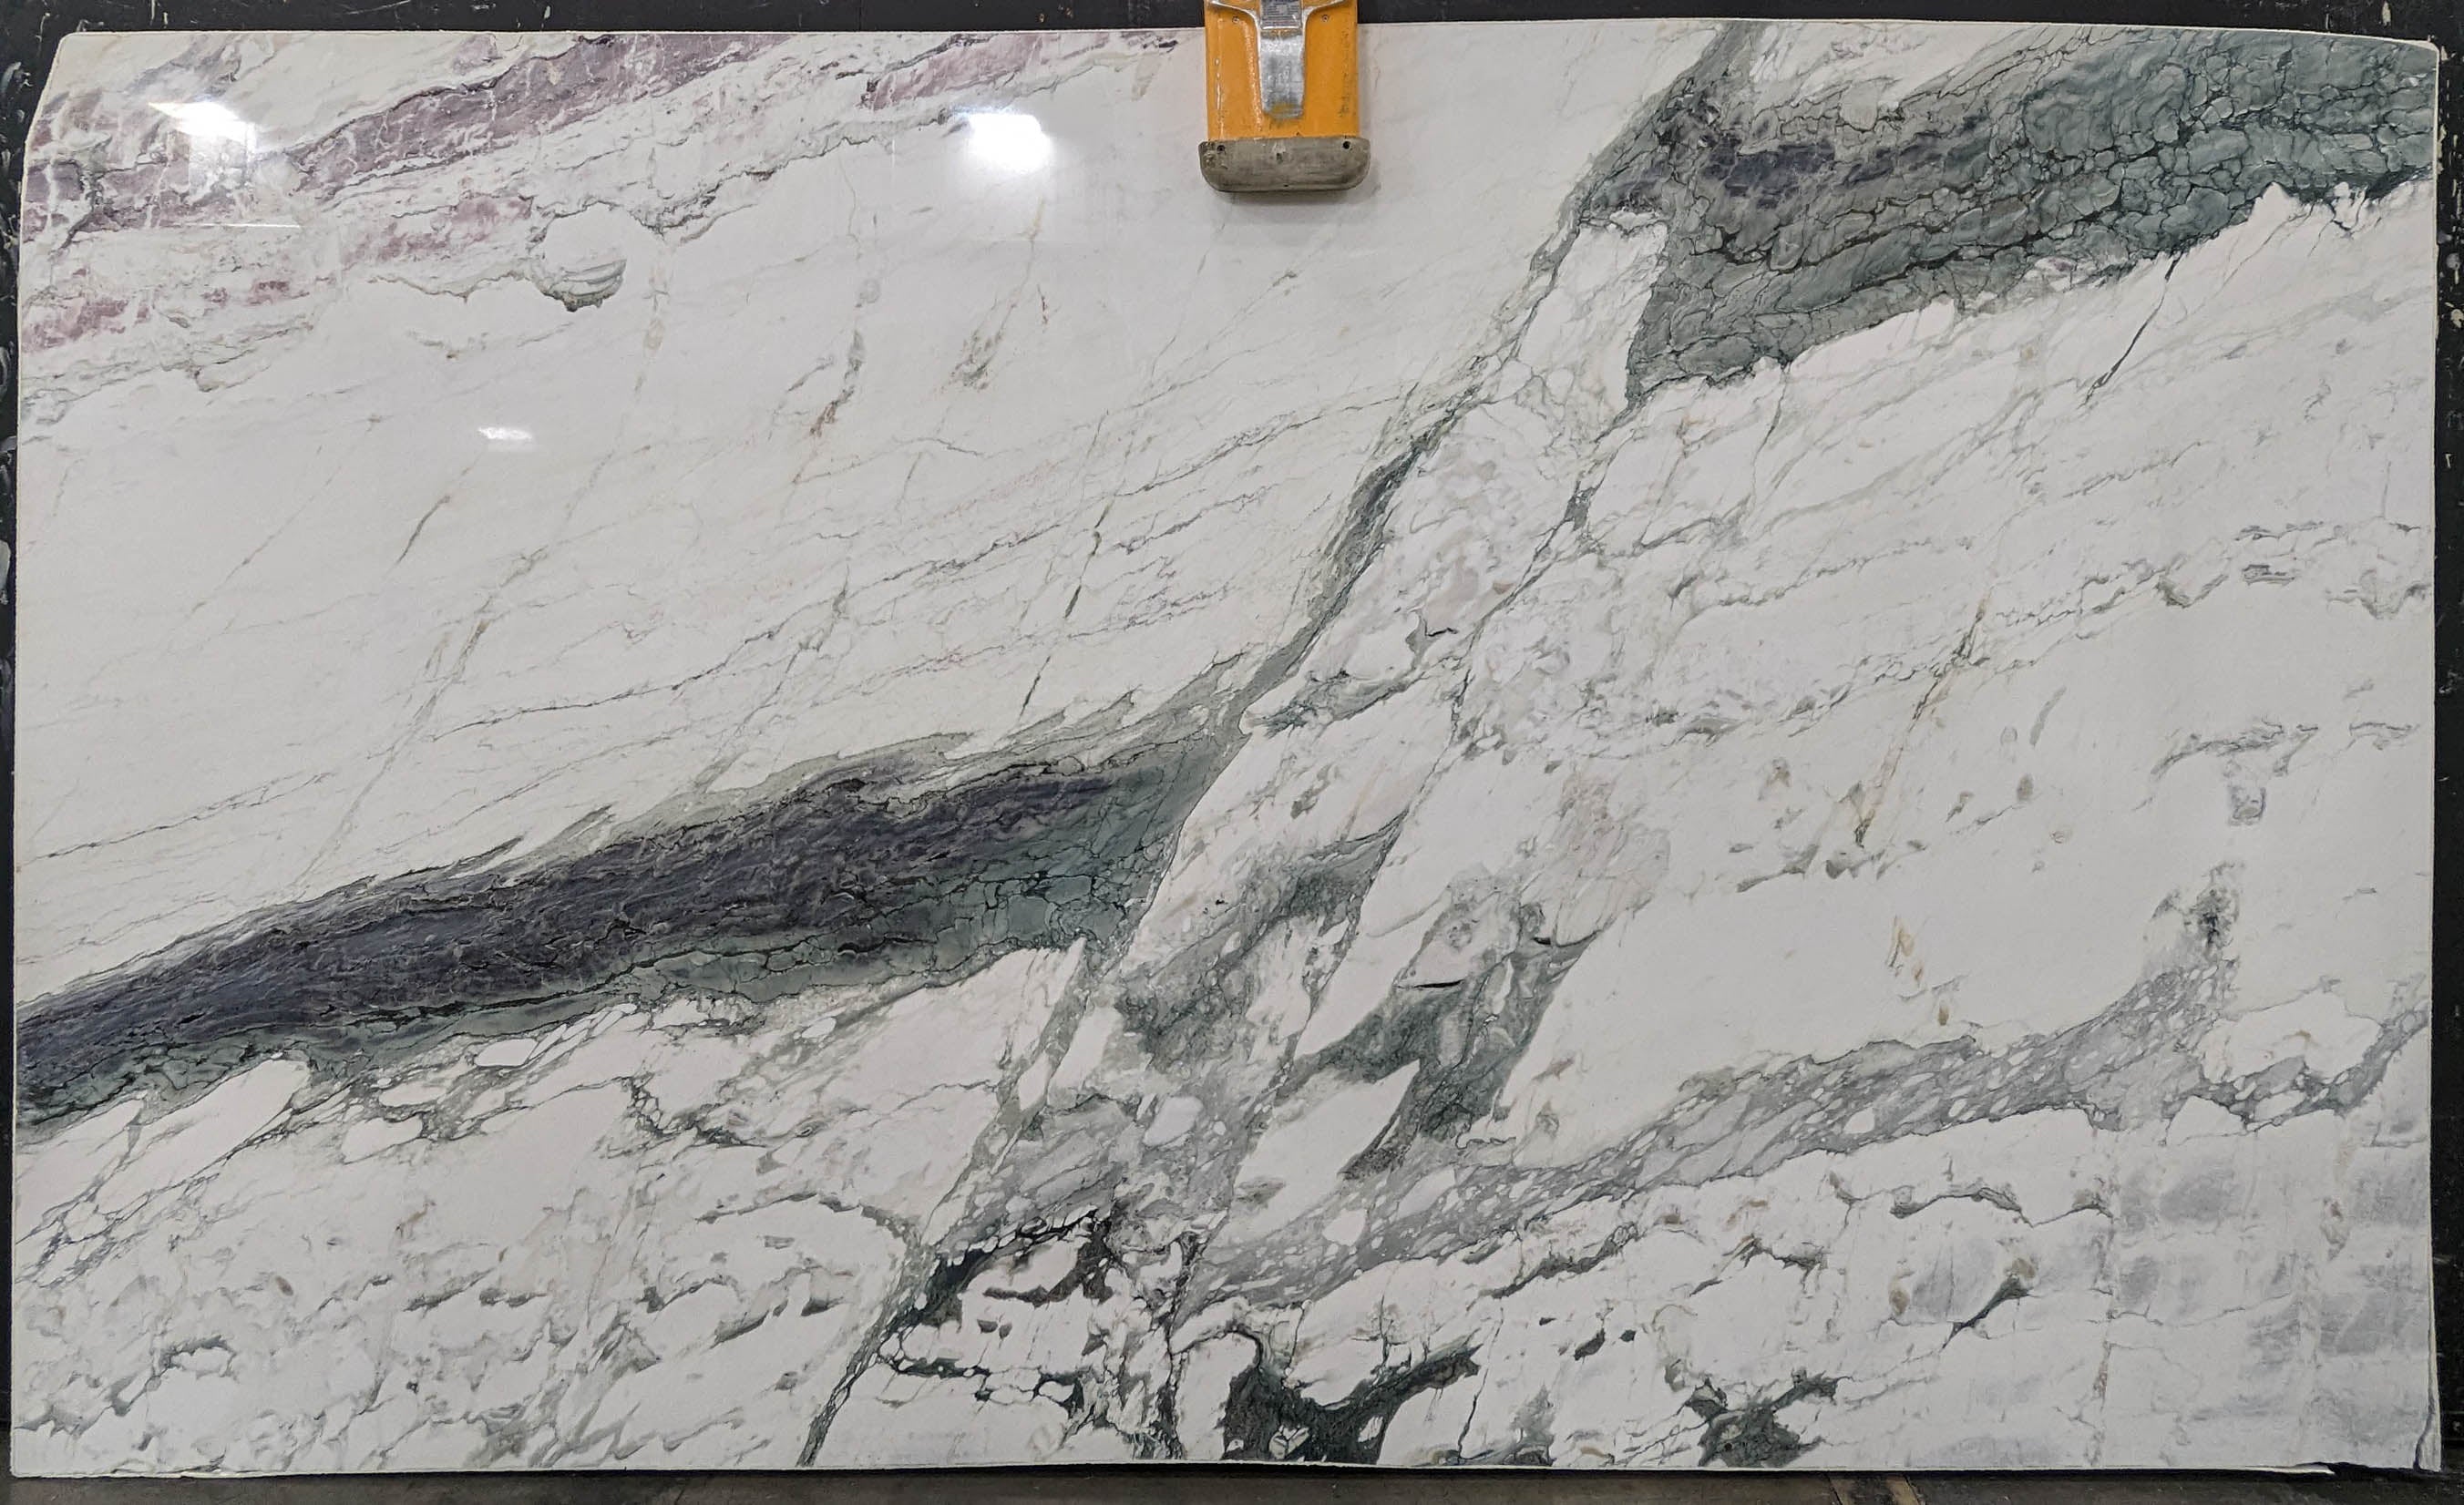  Breccia Capraia Marble Slab 3/4  Polished Stone - VR7428#21 -  71x120 